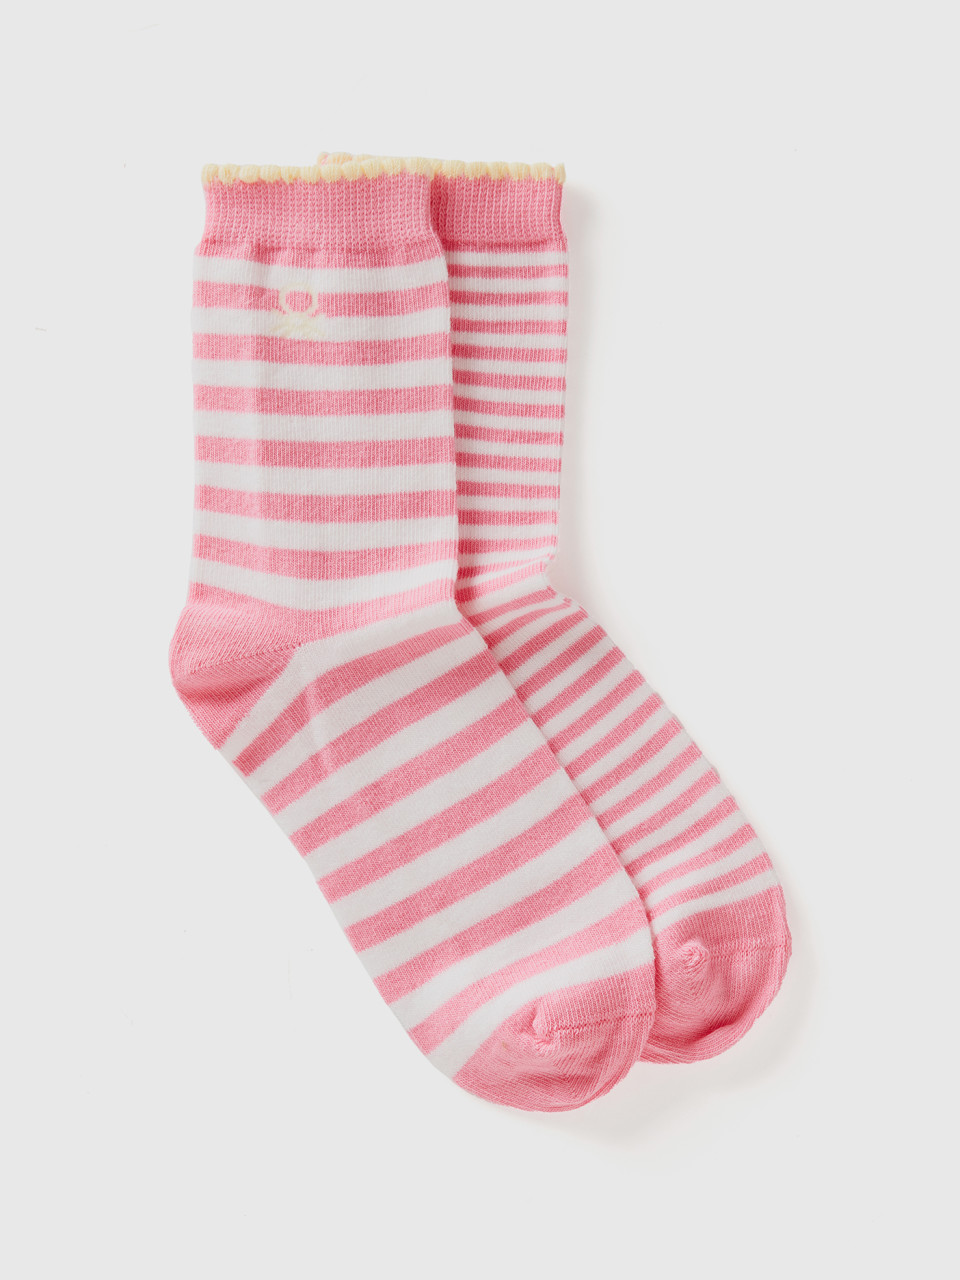 Benetton, Mix & Match Long Striped Socks, Pink, Kids